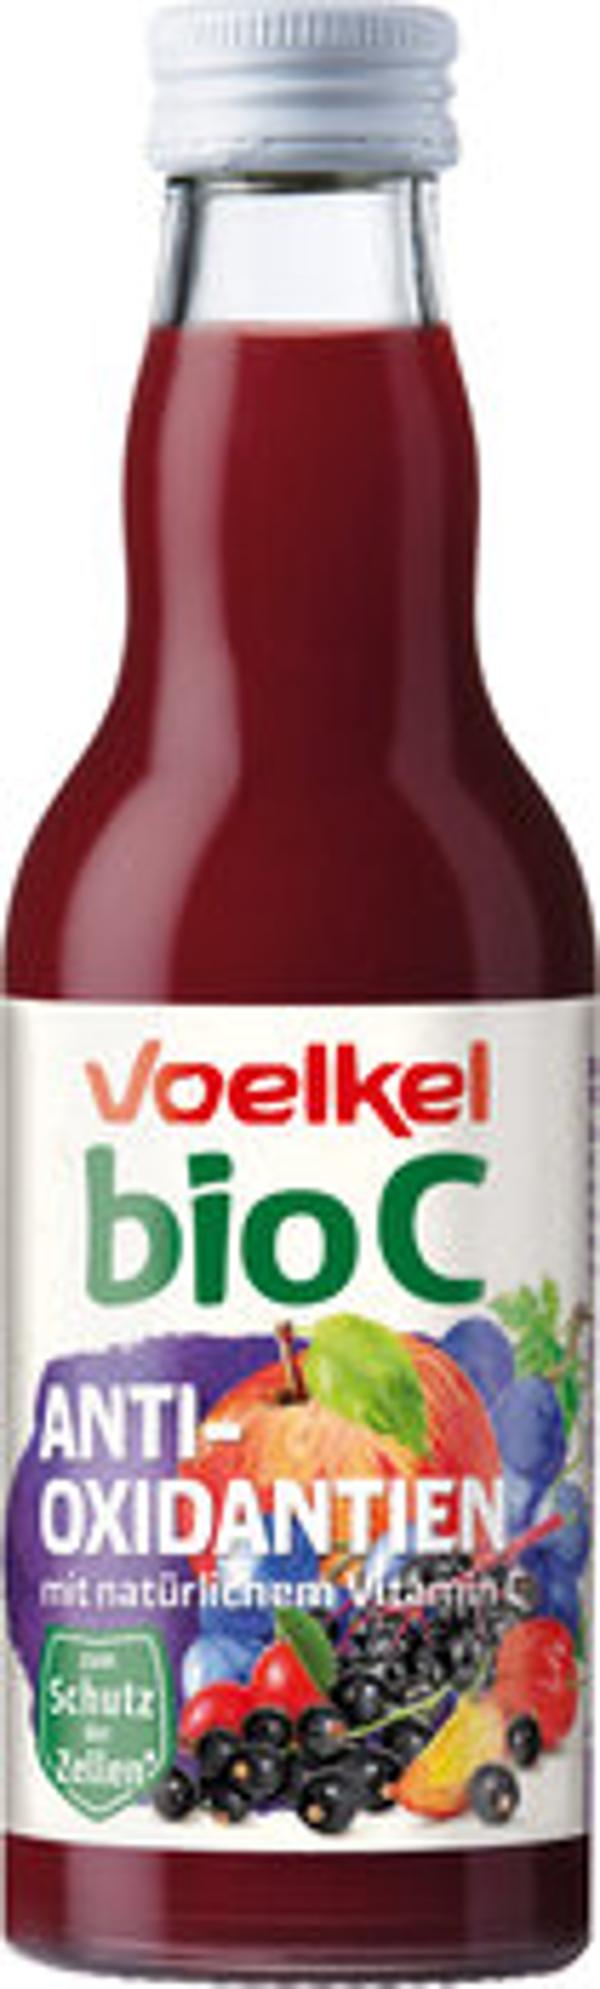 Produktfoto zu bioC Antioxidantien -Tagesbedarf-Flasche-0,2l